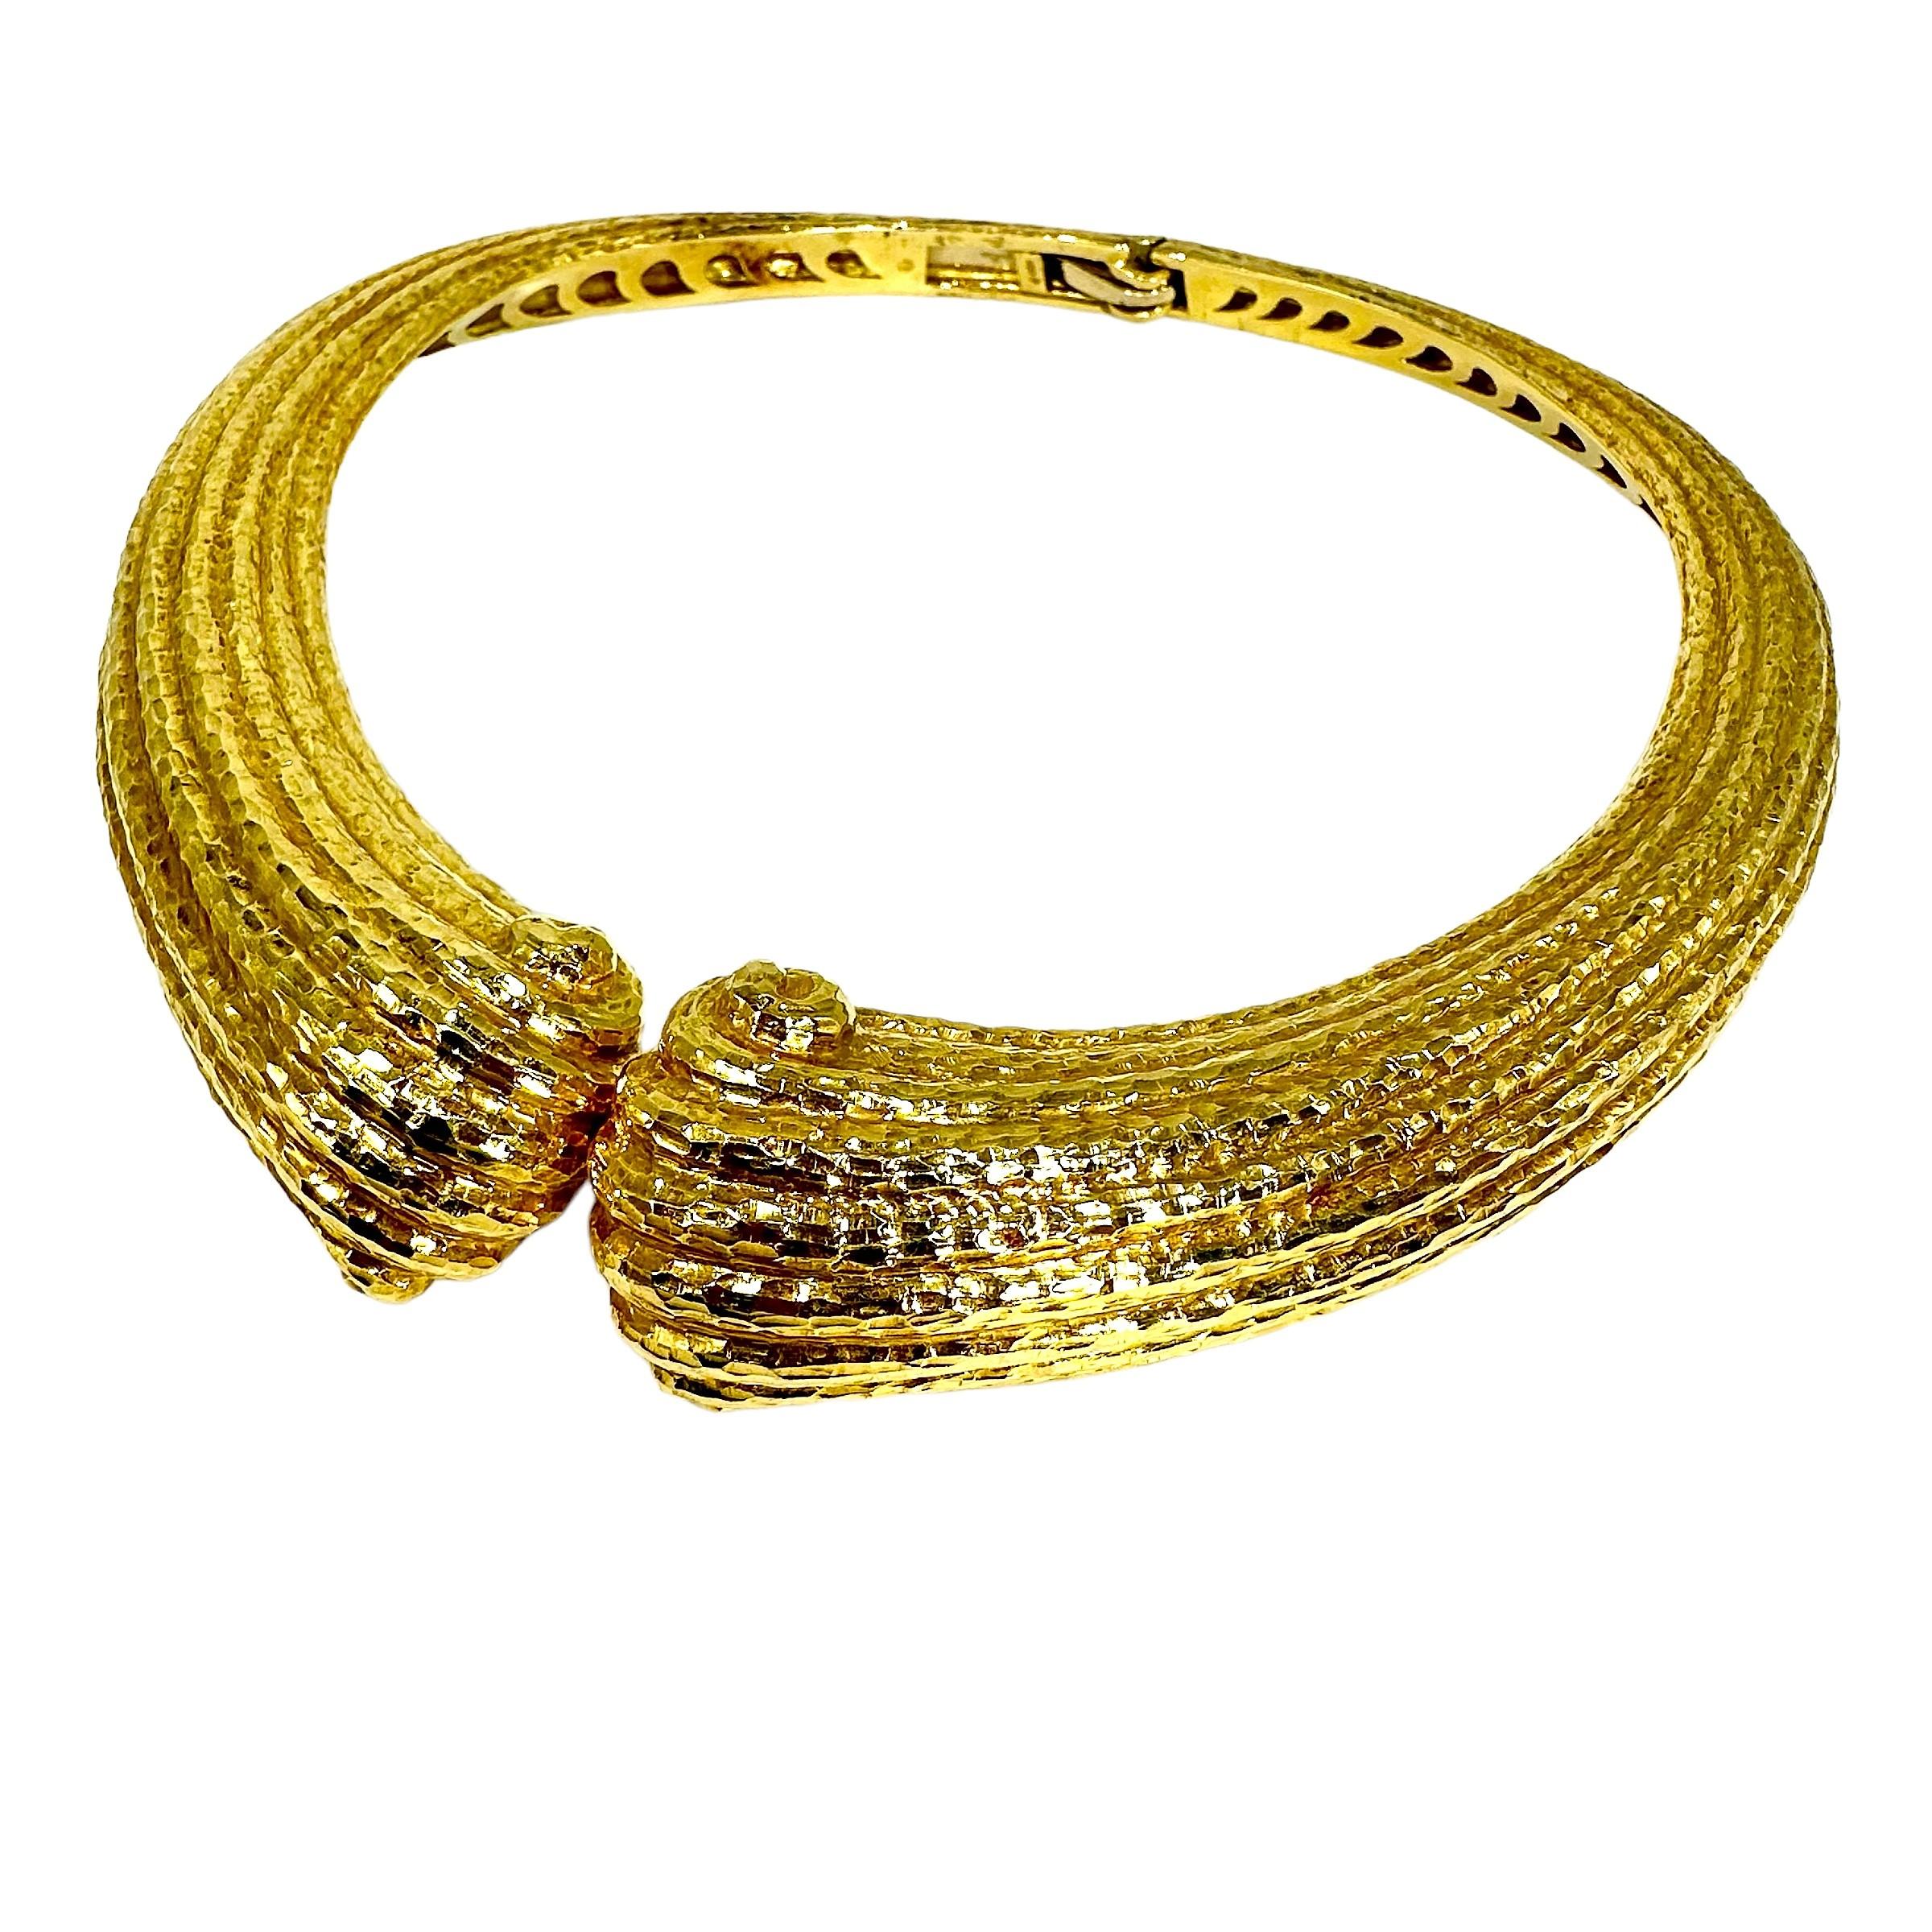 Women's Massive 18K Yellow Gold, Hammered Finish, Italian Scroll Motif Choker Necklace For Sale